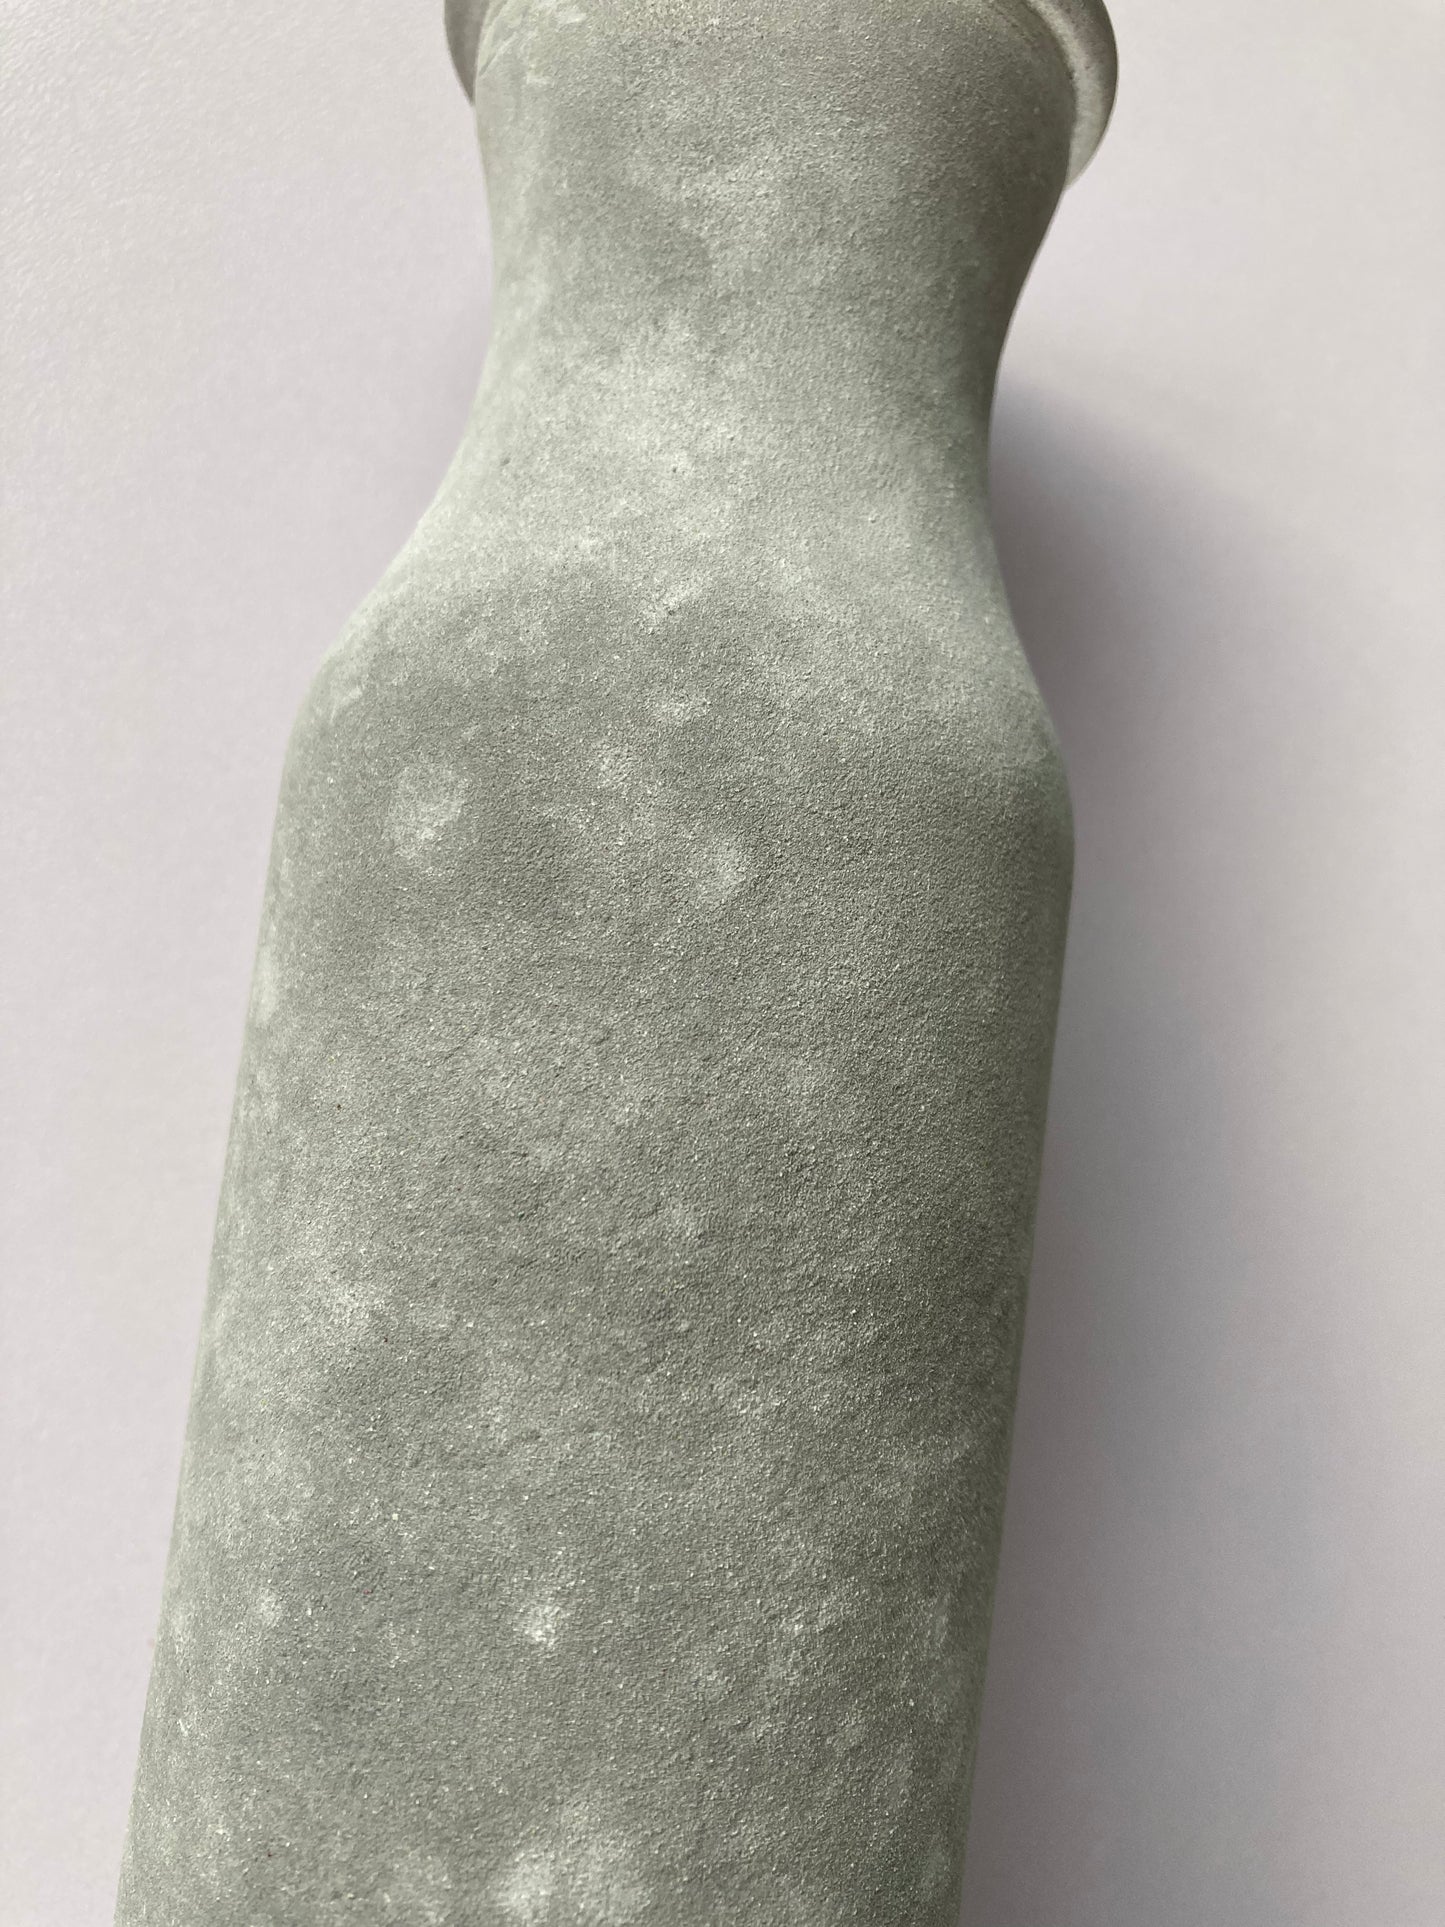 Grey Chalk Milk Bottle Style Vase